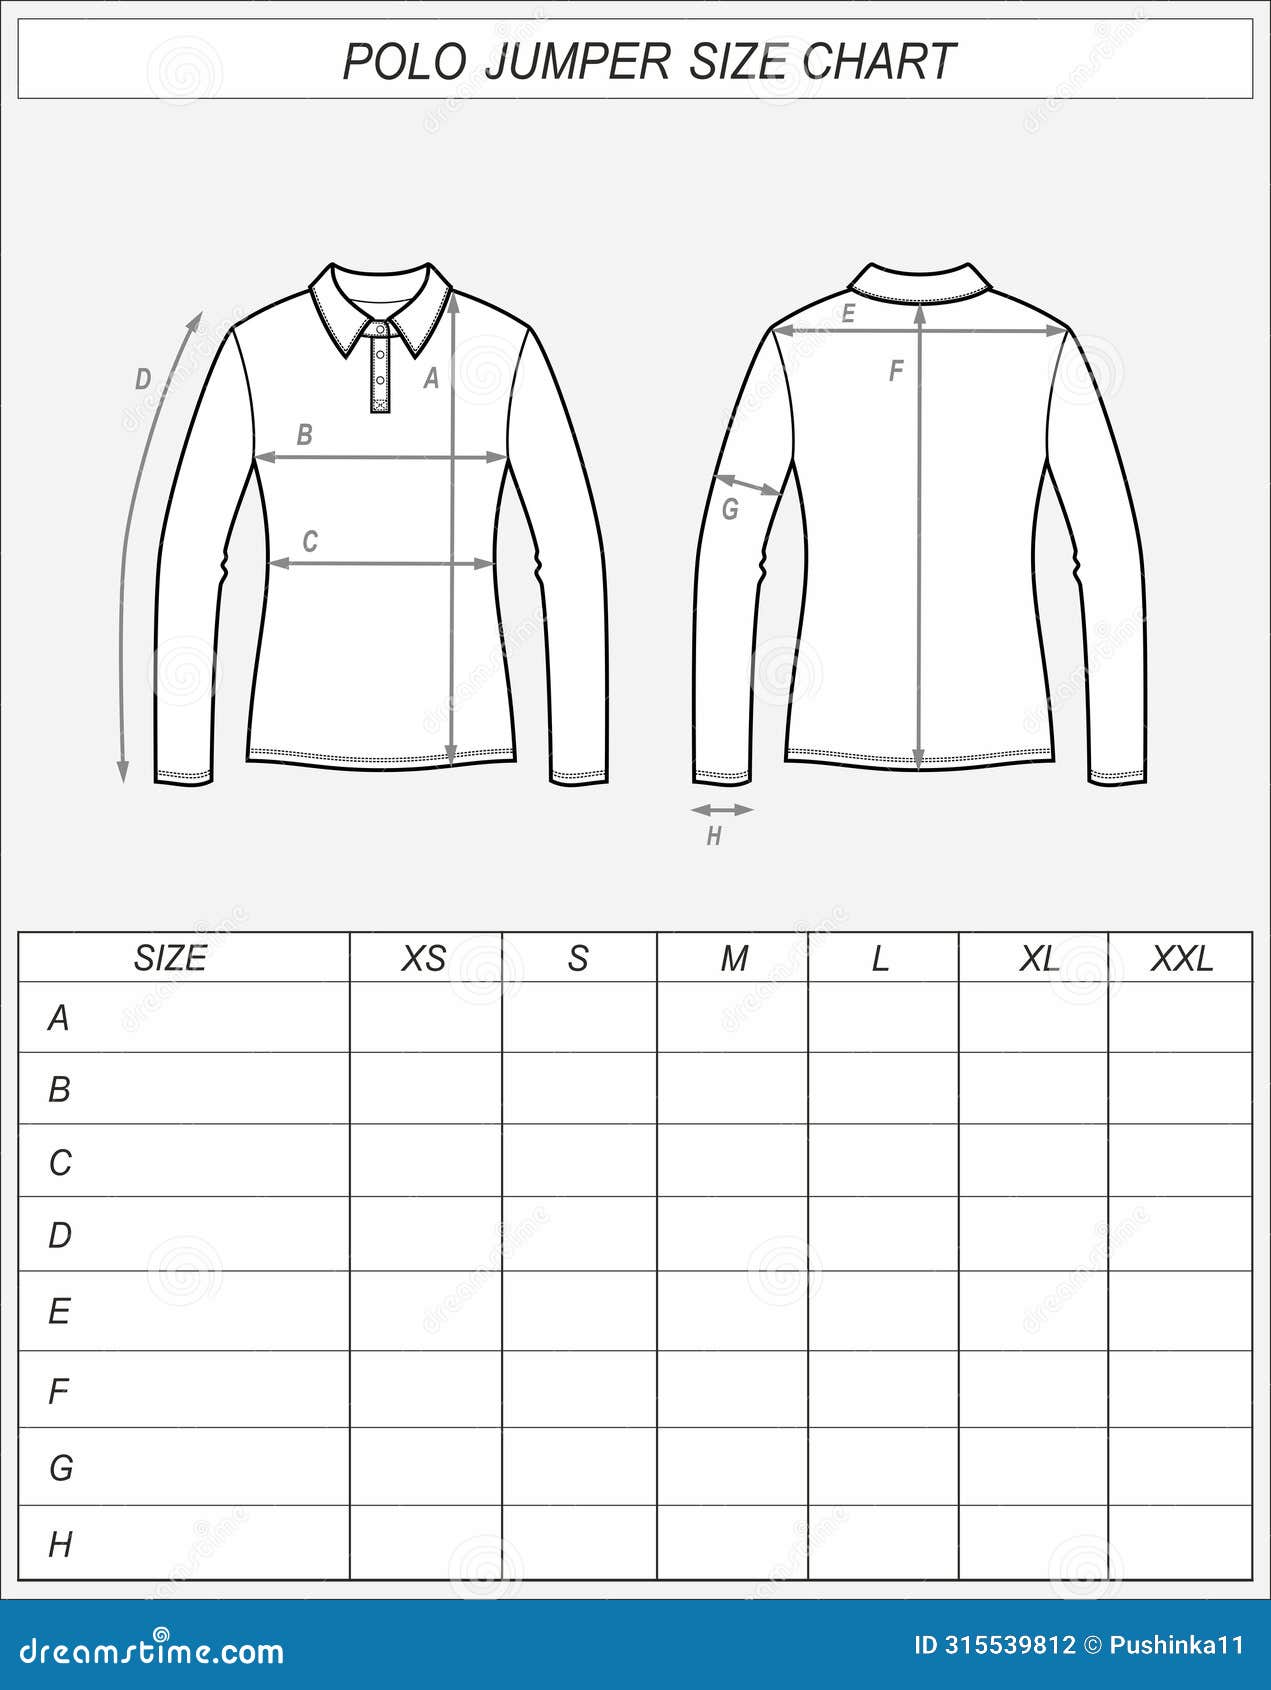 polo jumper size chart. sweatshirt